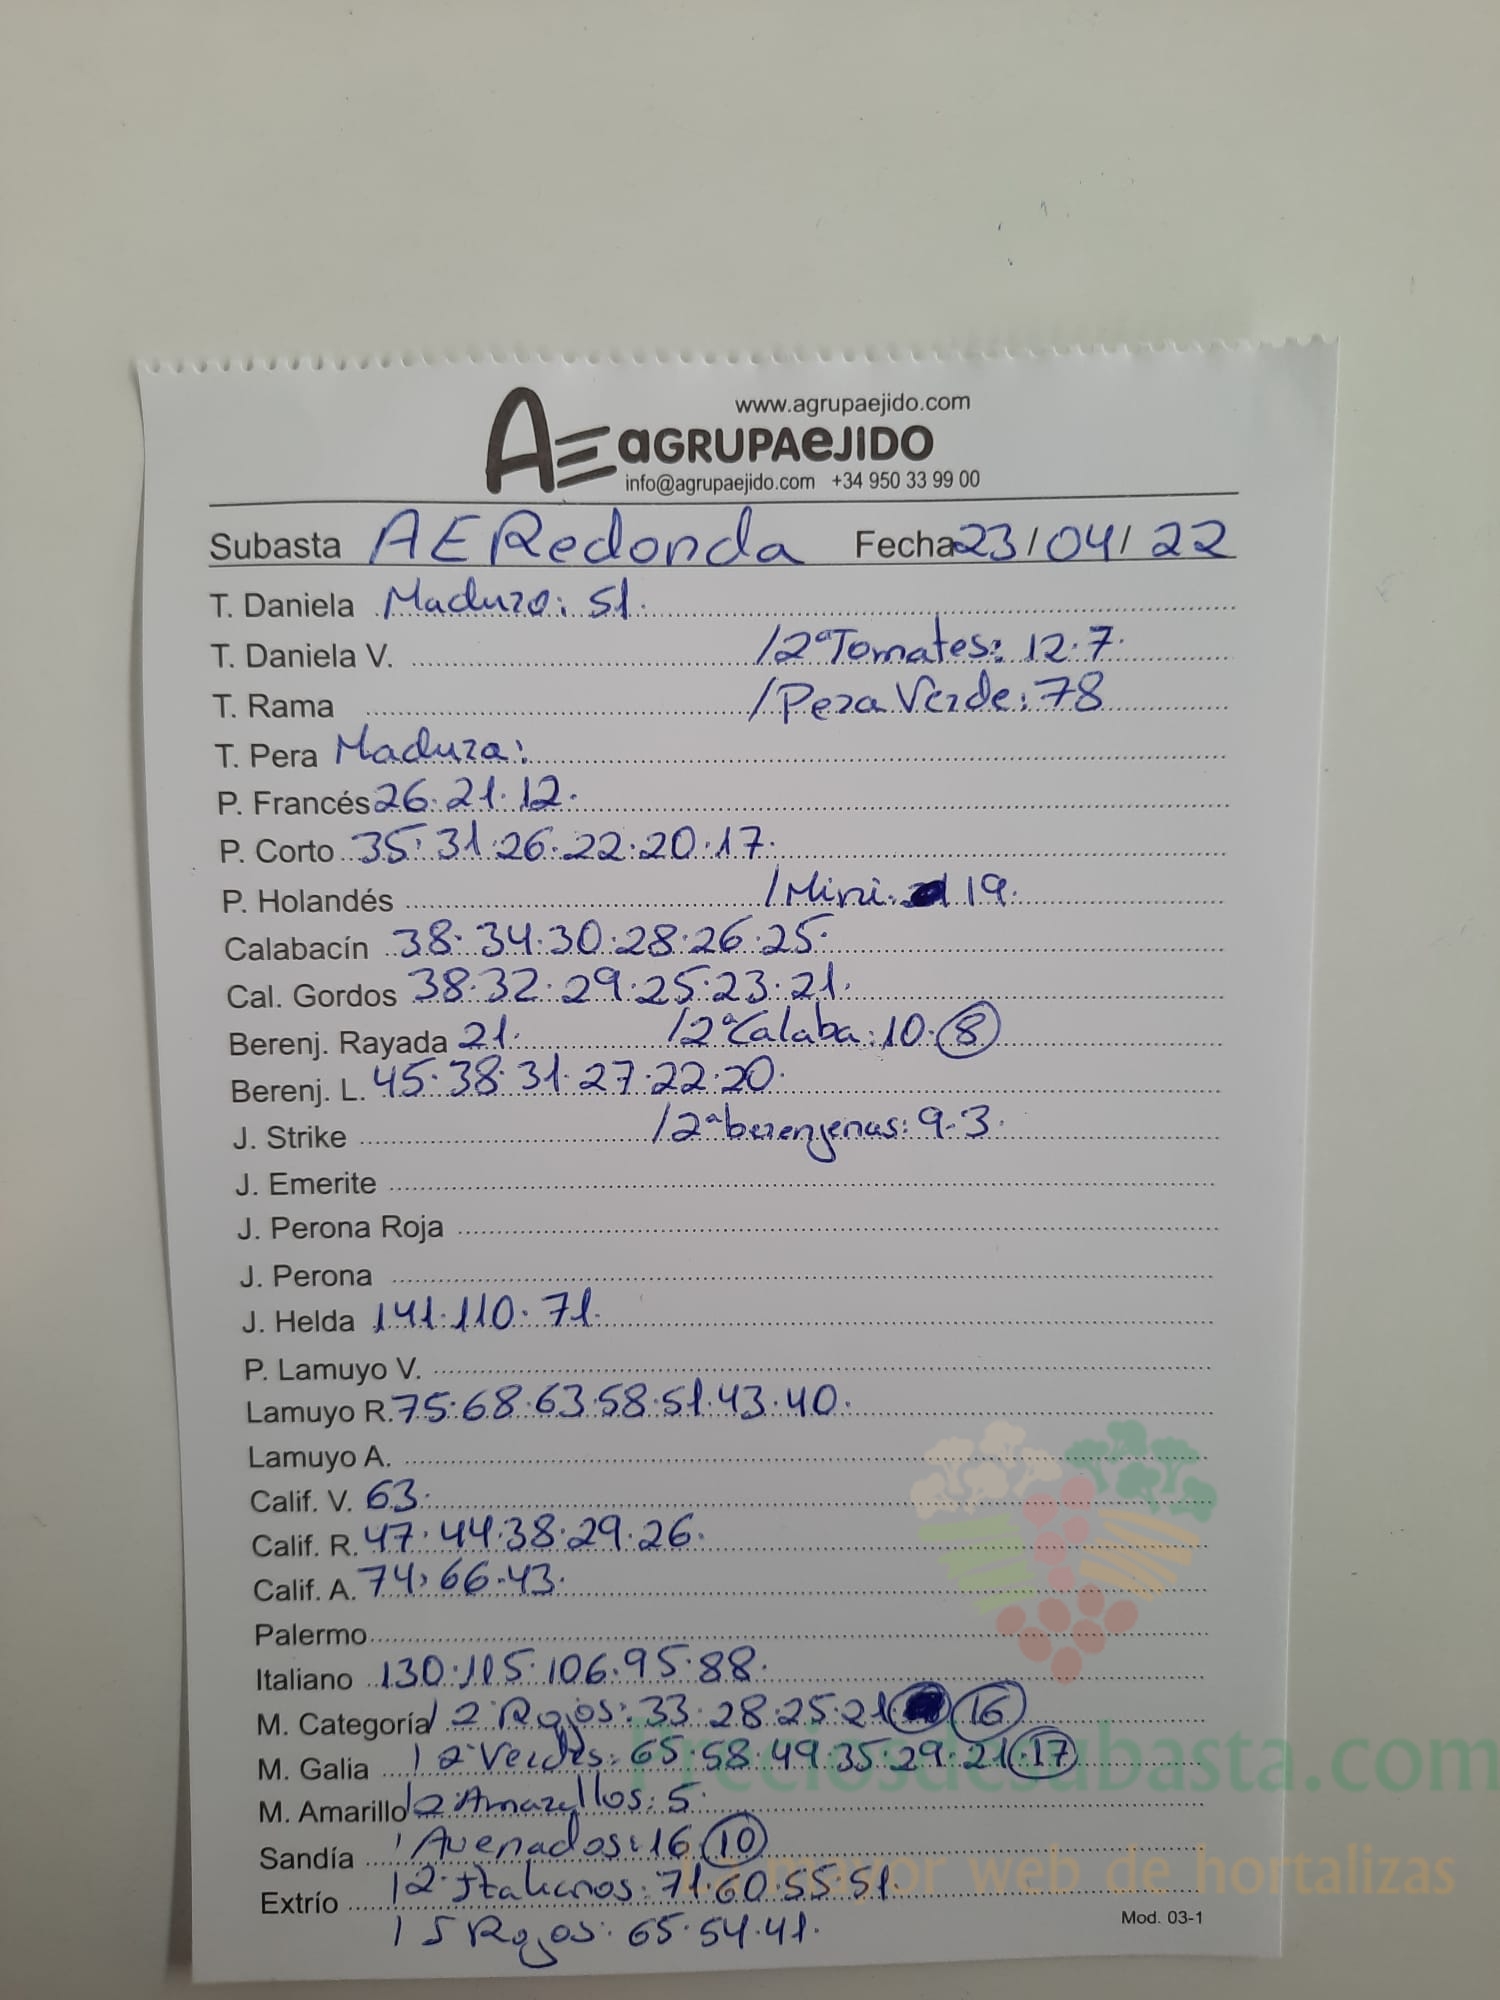 Subasta hortofrutícola AgrupaEjido La Redonda 23 de abril 2022